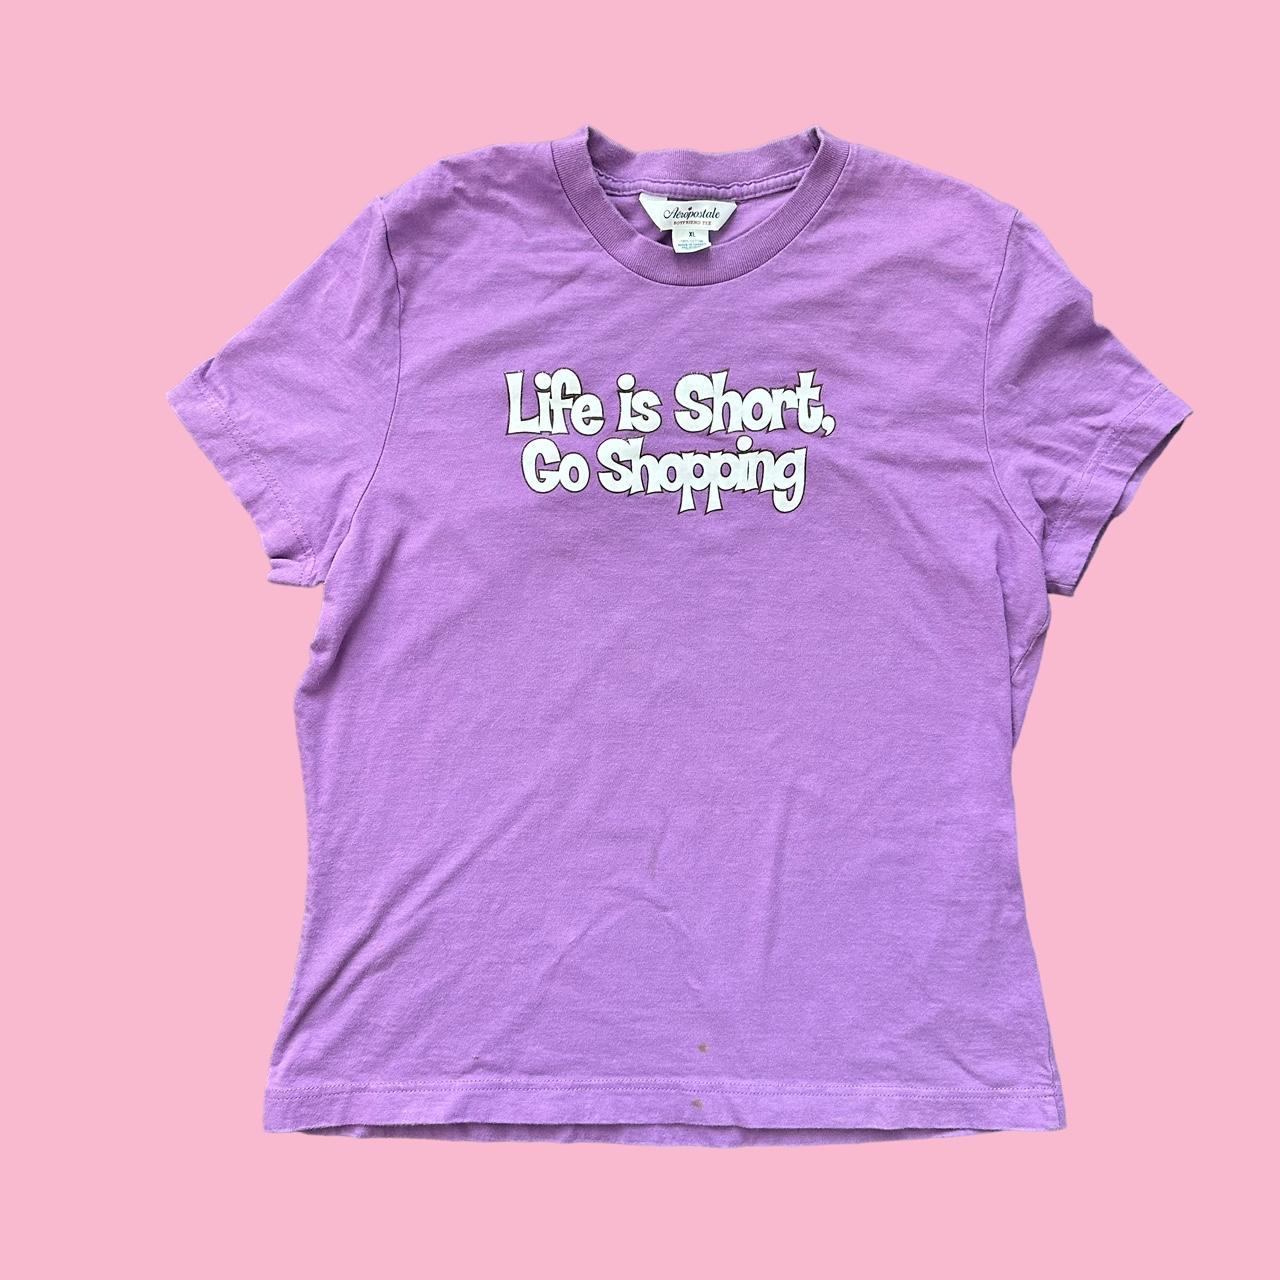 aeropostale shirts for girls purple